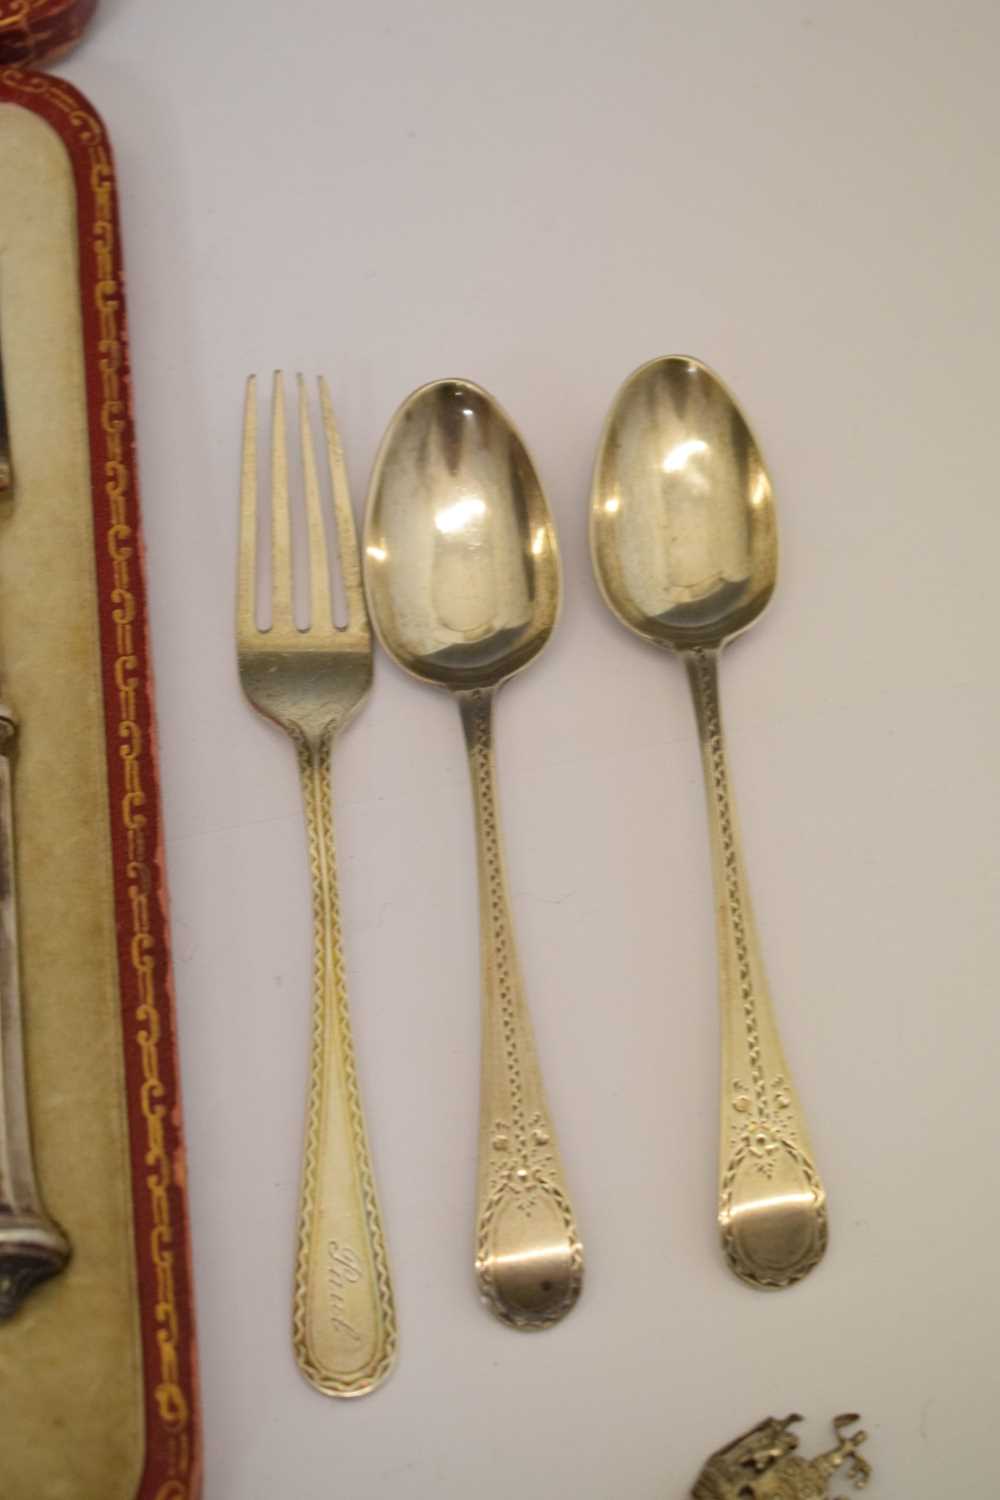 Victorian silver butter dish, cased set of George V silver handled fruit knives and forks, etc - Image 13 of 22